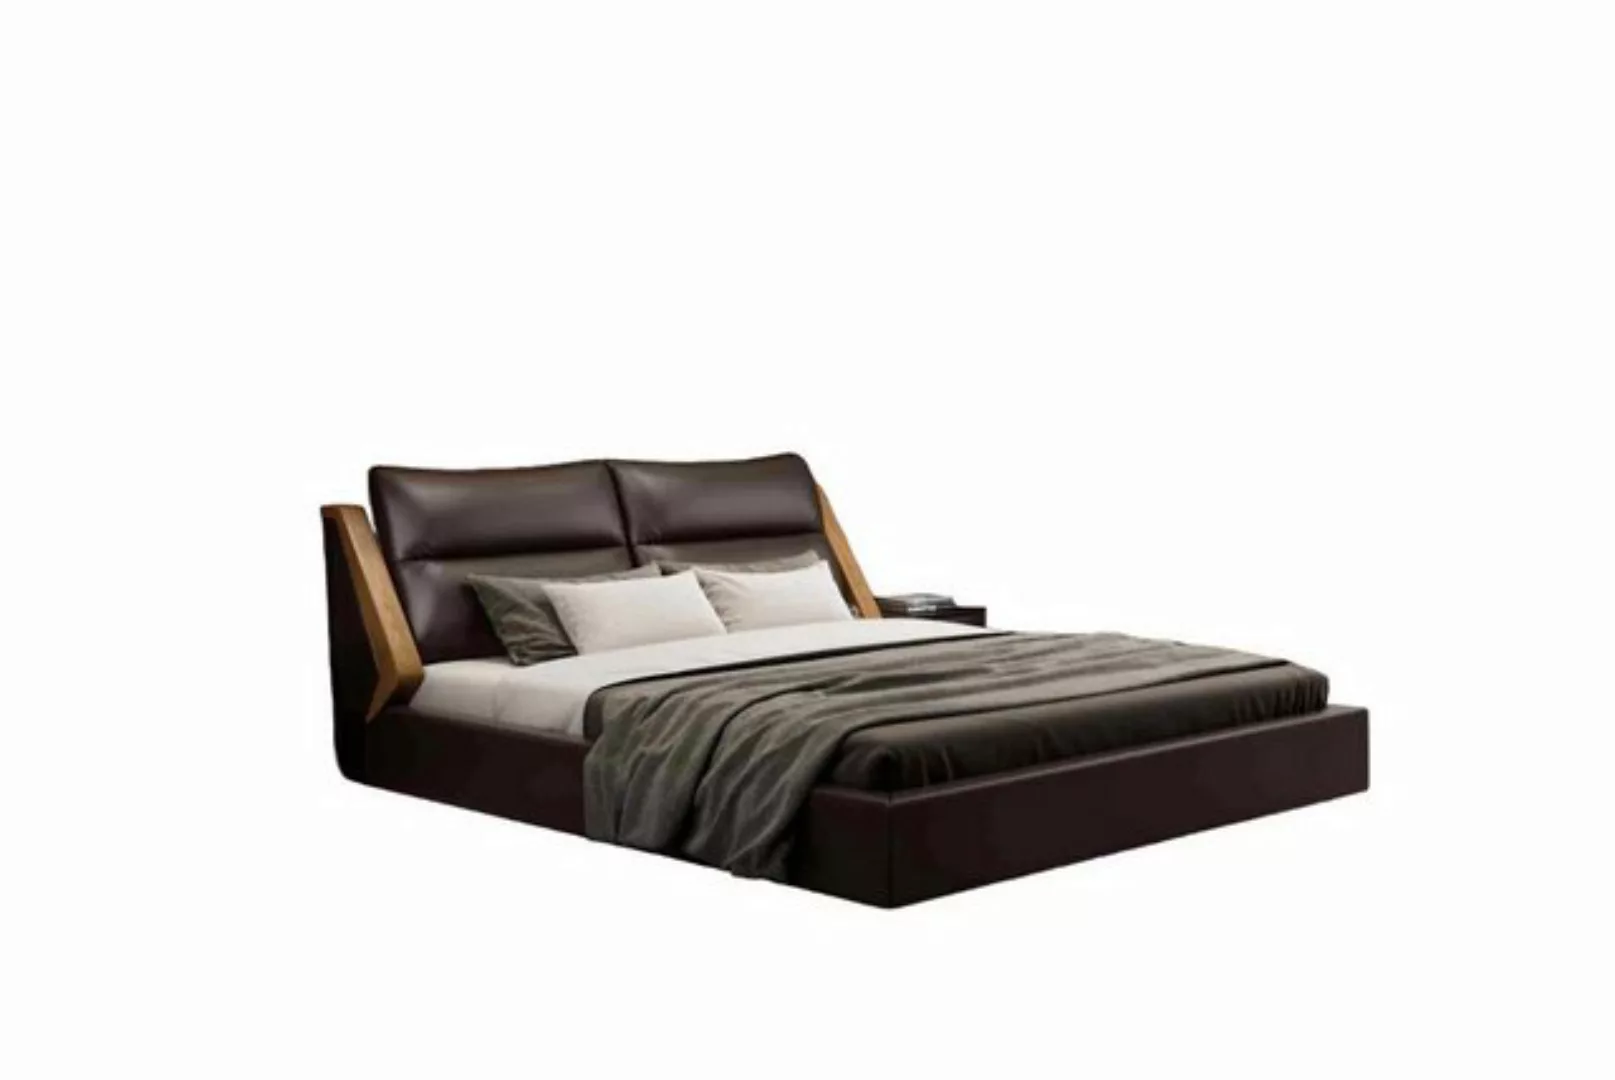 JVmoebel Bett Bett Polster Design Luxus Doppel Betten Schlafzimmer Leder So günstig online kaufen